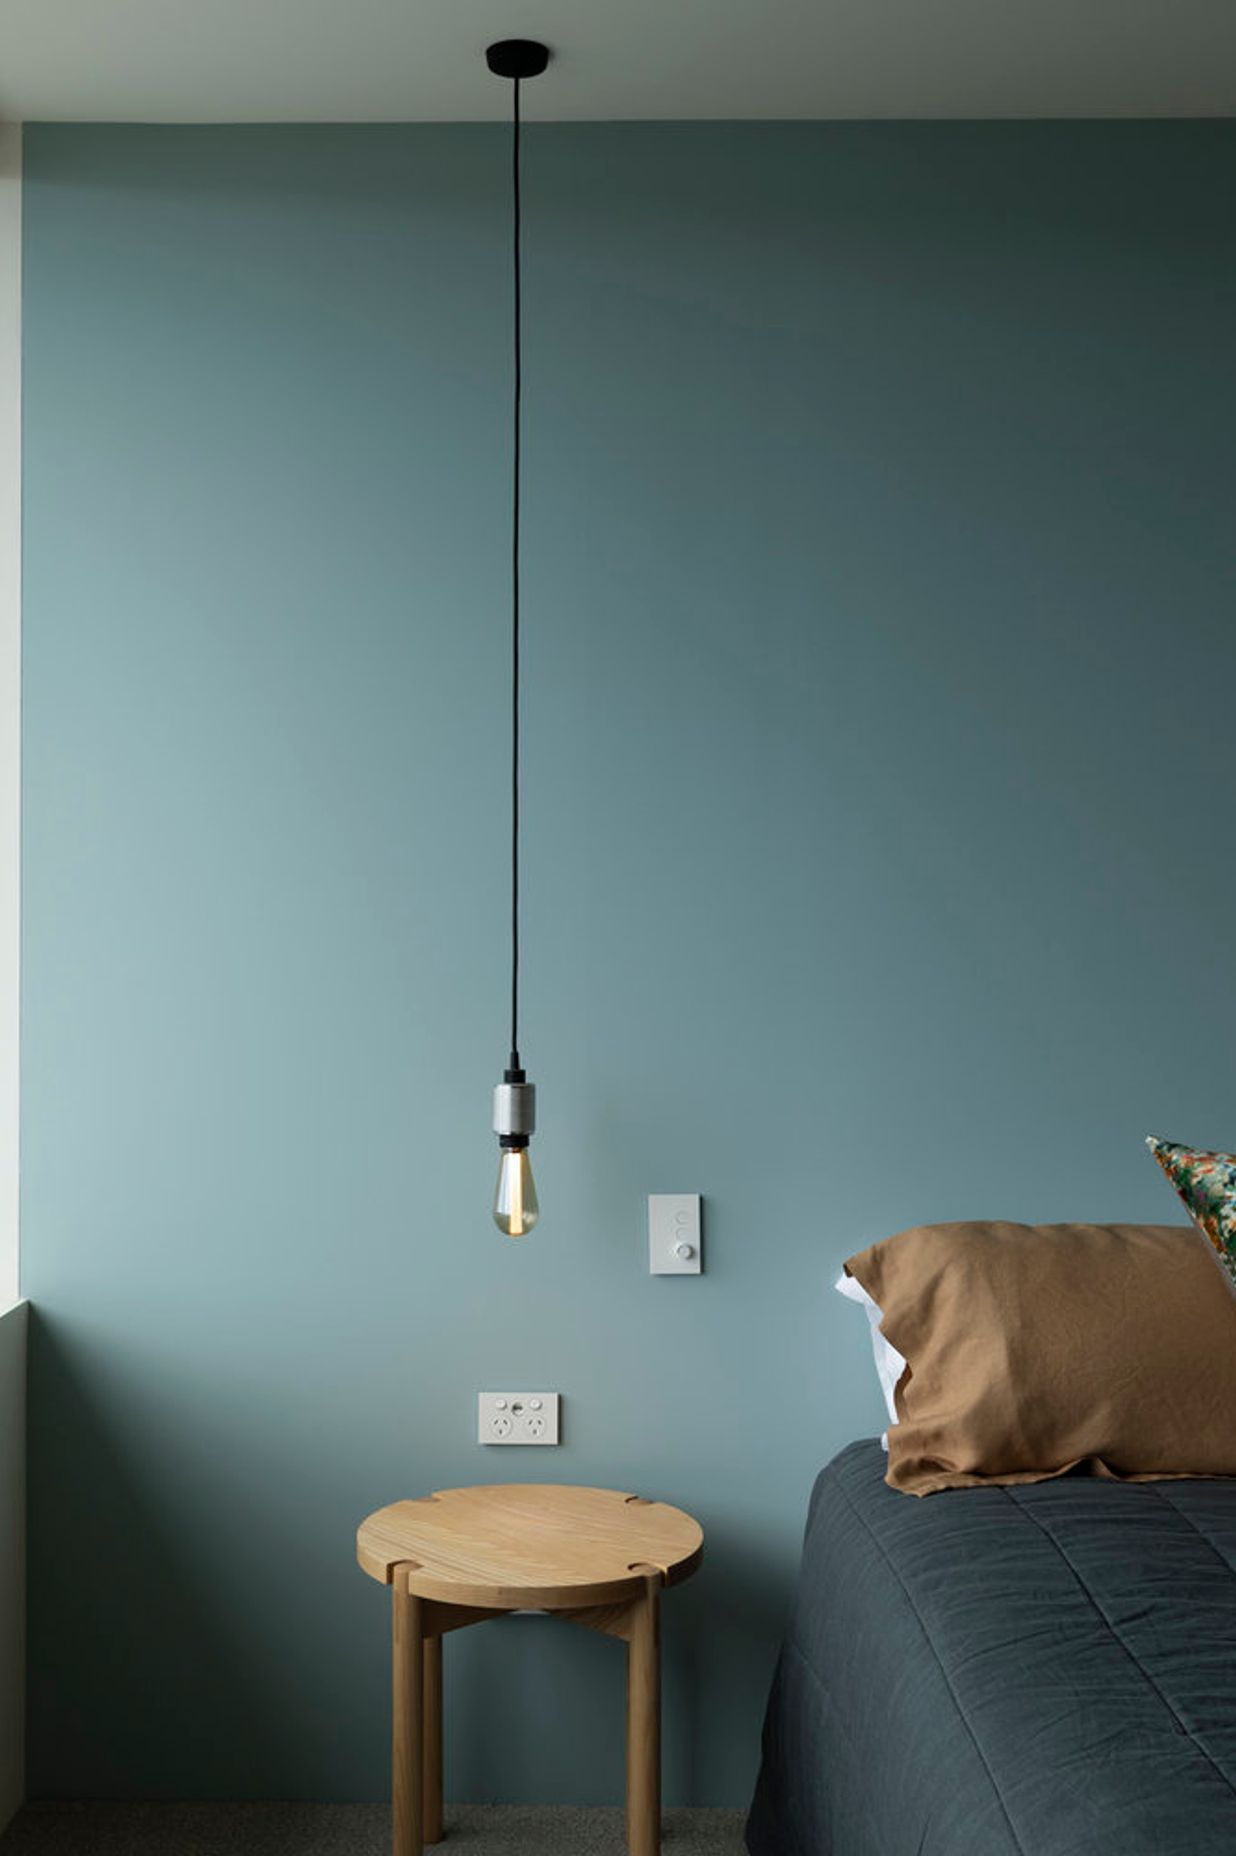 A simple low-hanging lightbulb provides bedside lighting.